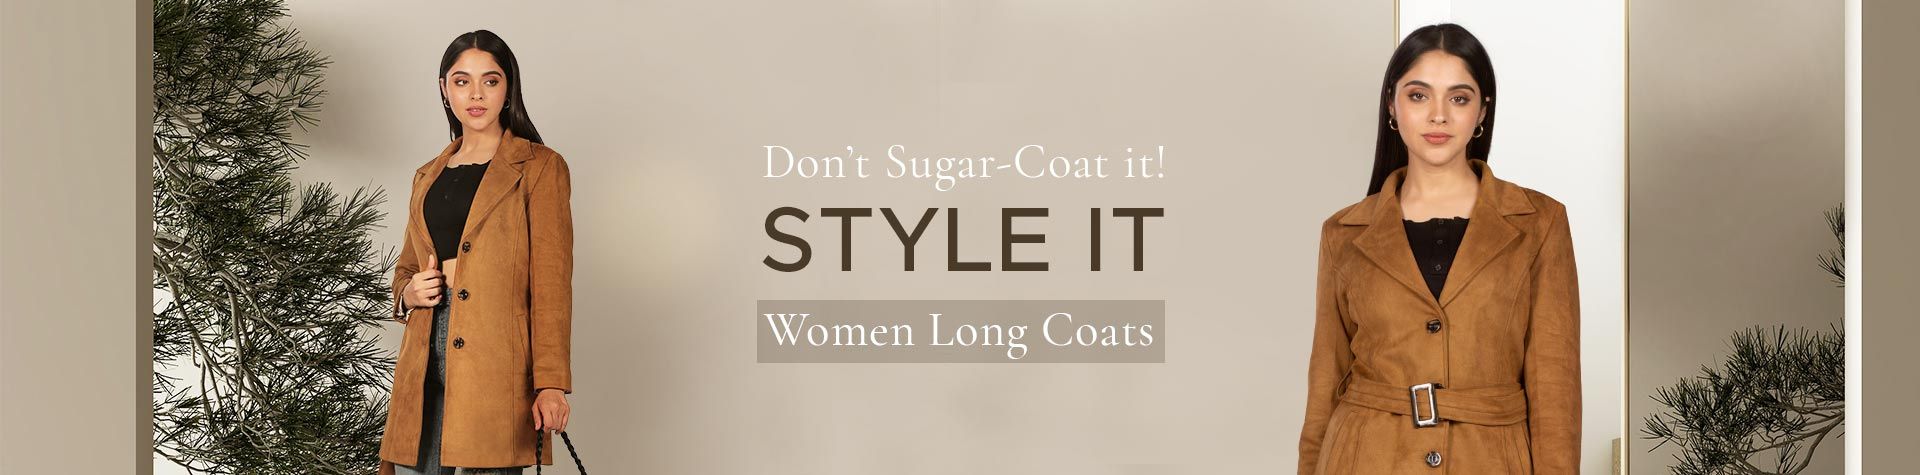 Long Coats for Women Online